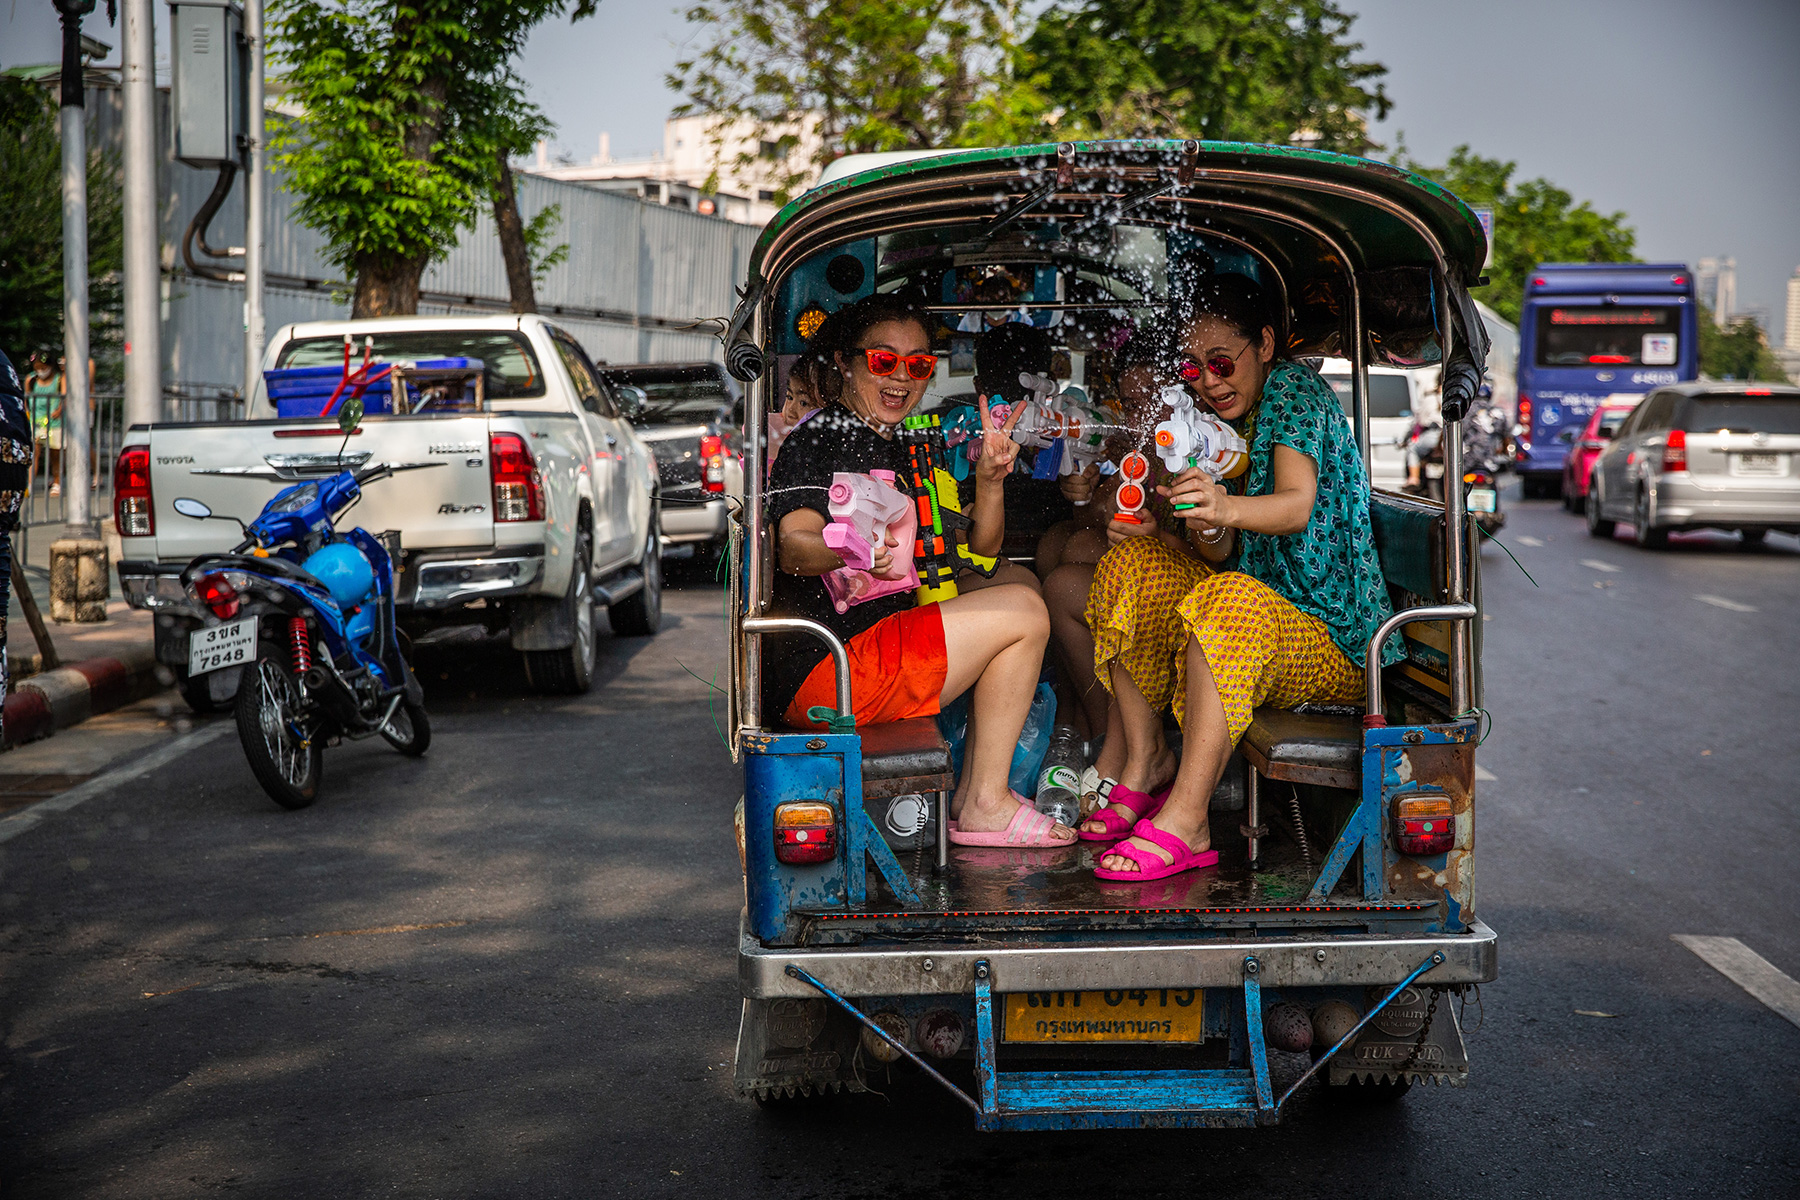 Two women spraying water guns from a traditional Thai truck, celebrating Songkran